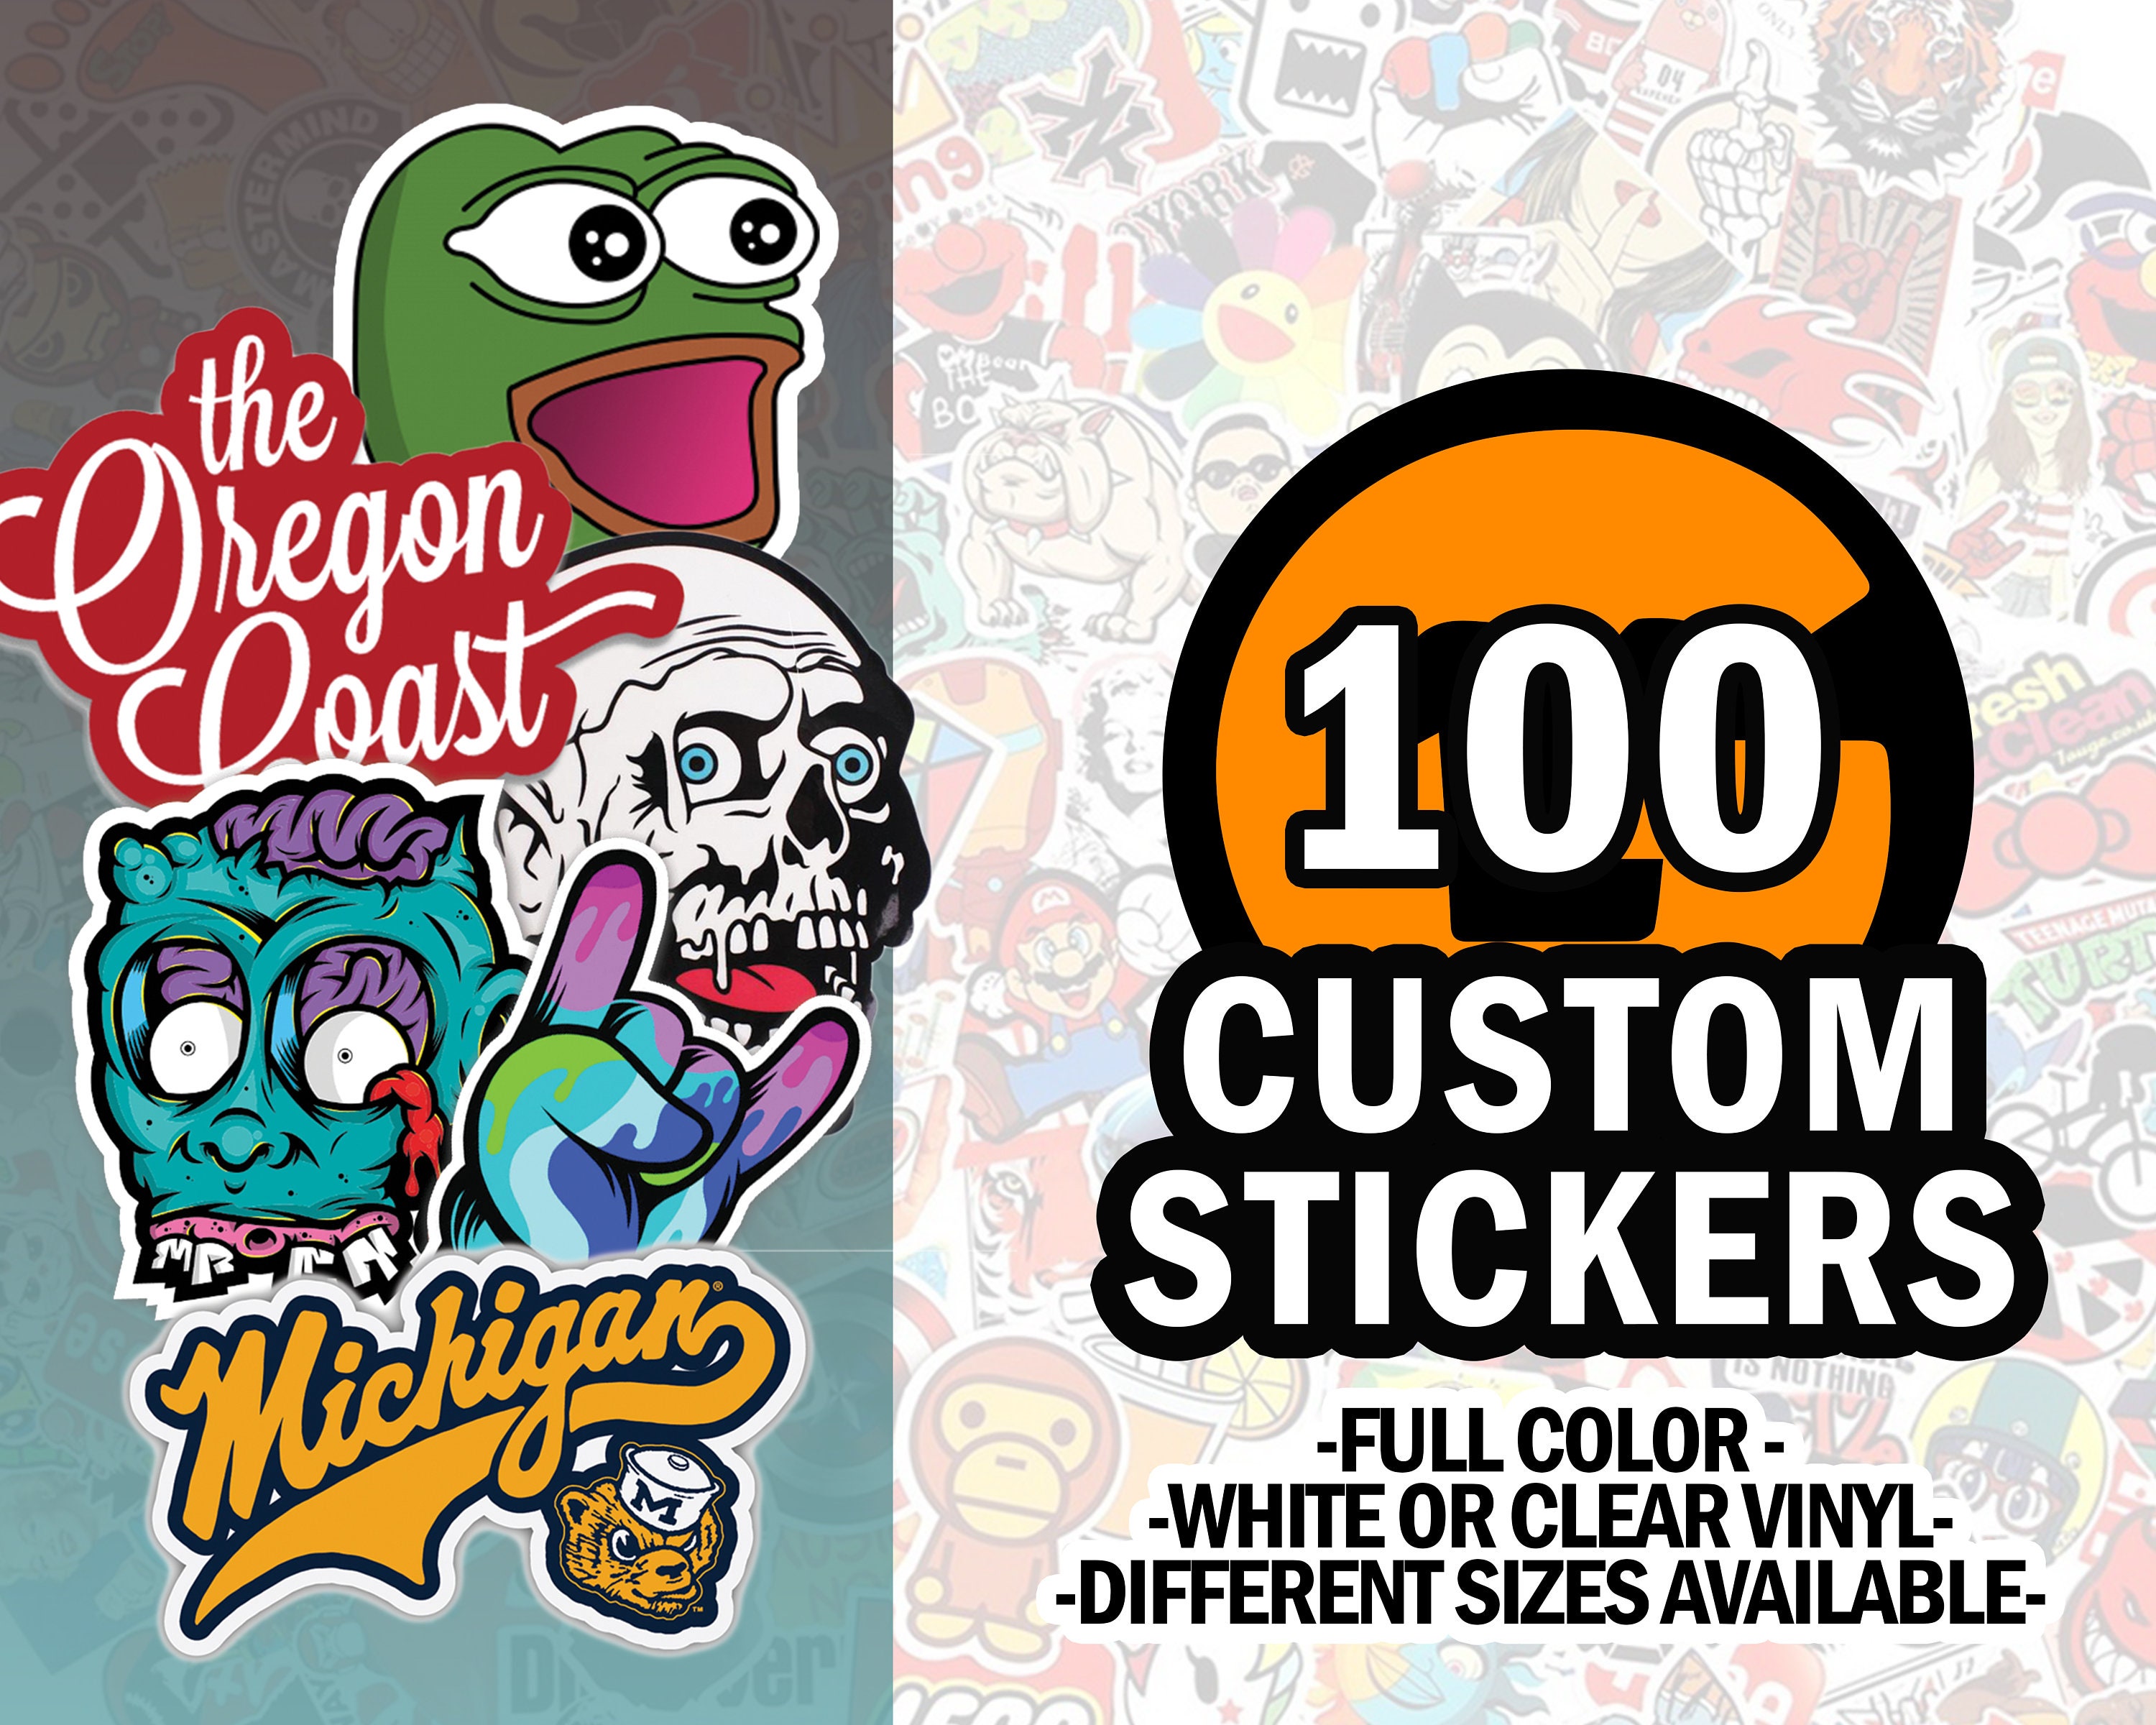 100 Custom Stickers - Sticker Labels Die Cut Vinyl Promotional Not Paper Choose Your Shape